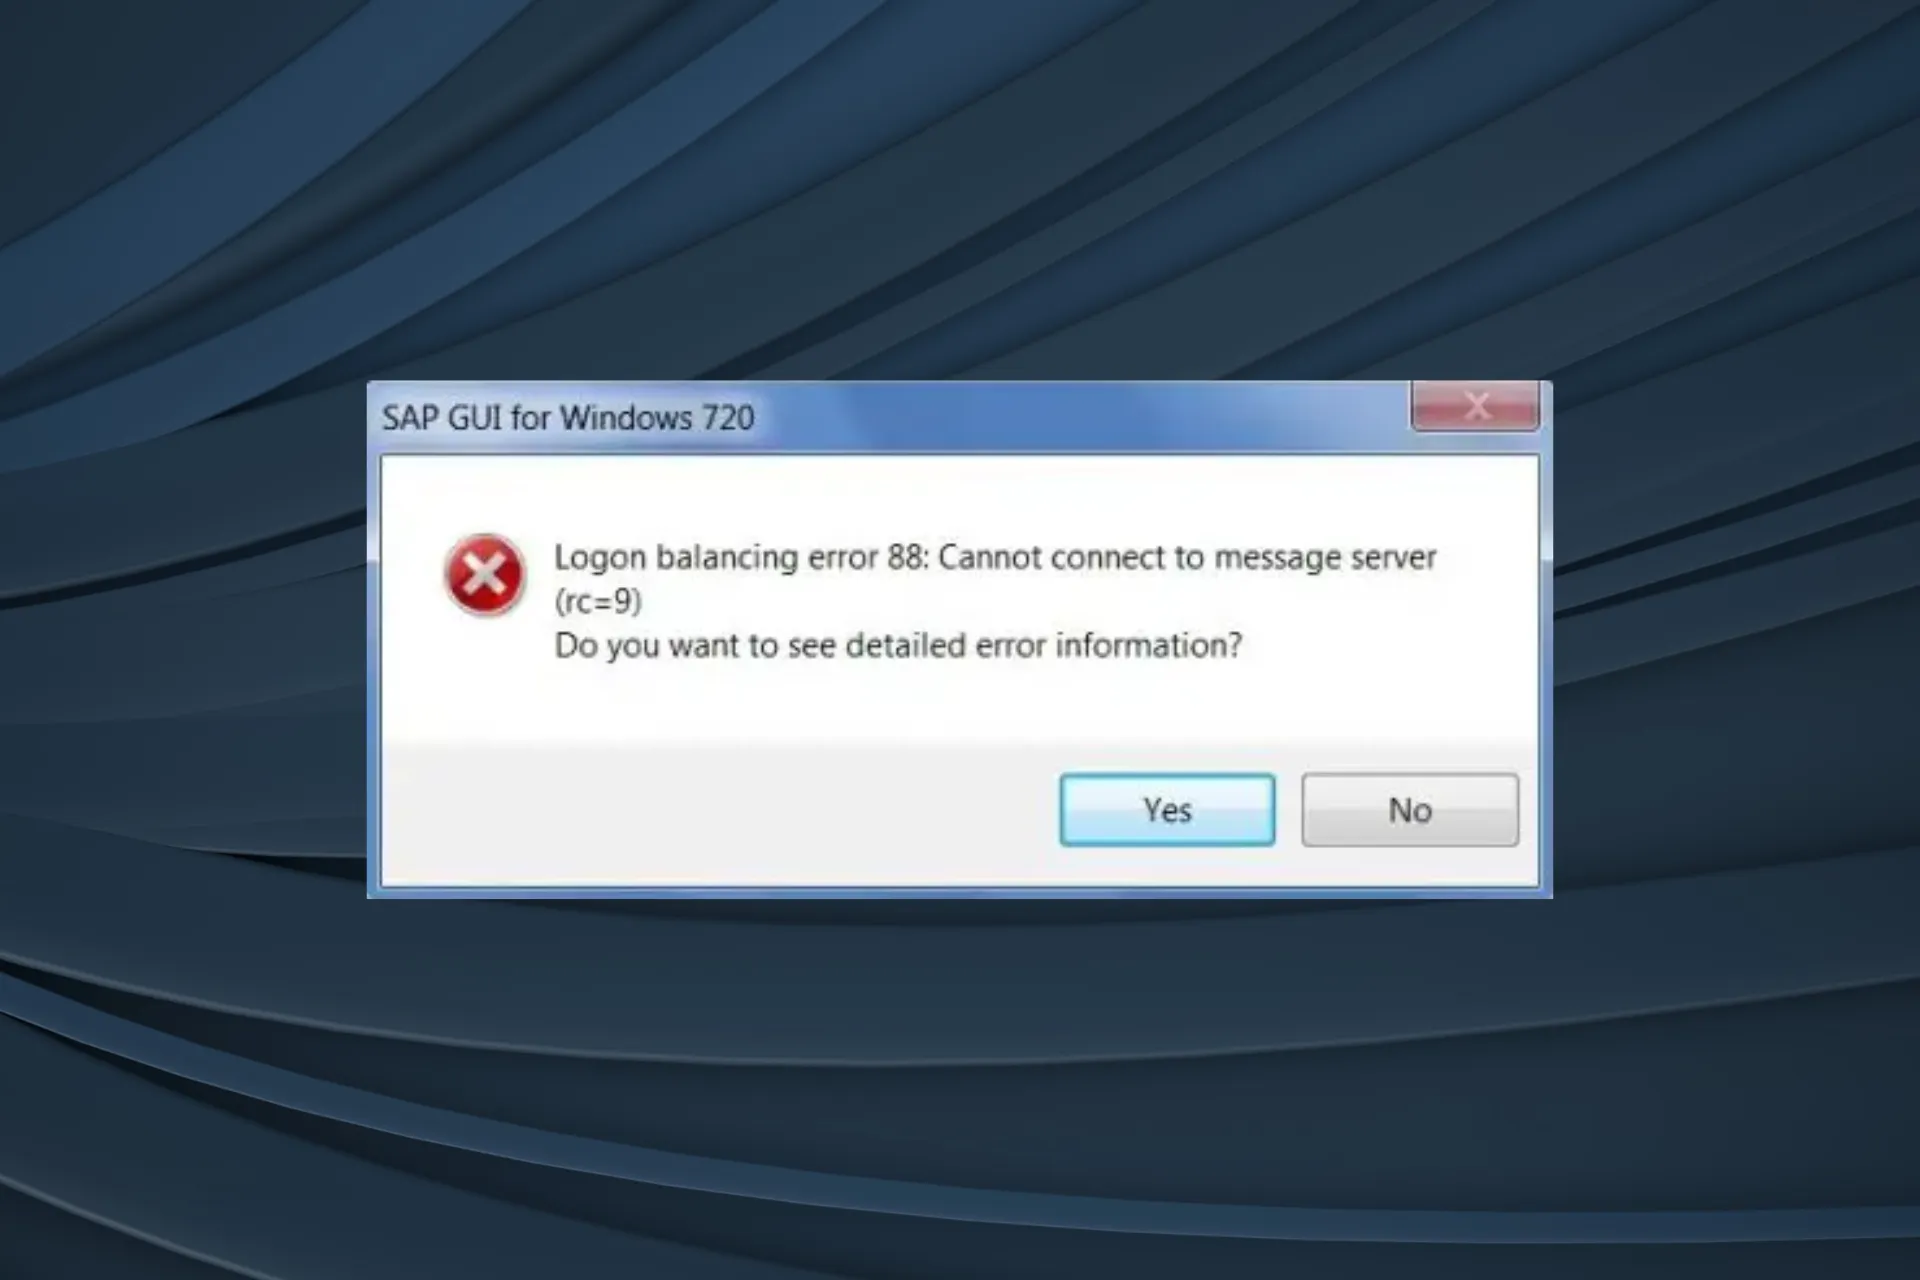 corrigir erro de balanceamento de logon 88 no SAP GUI